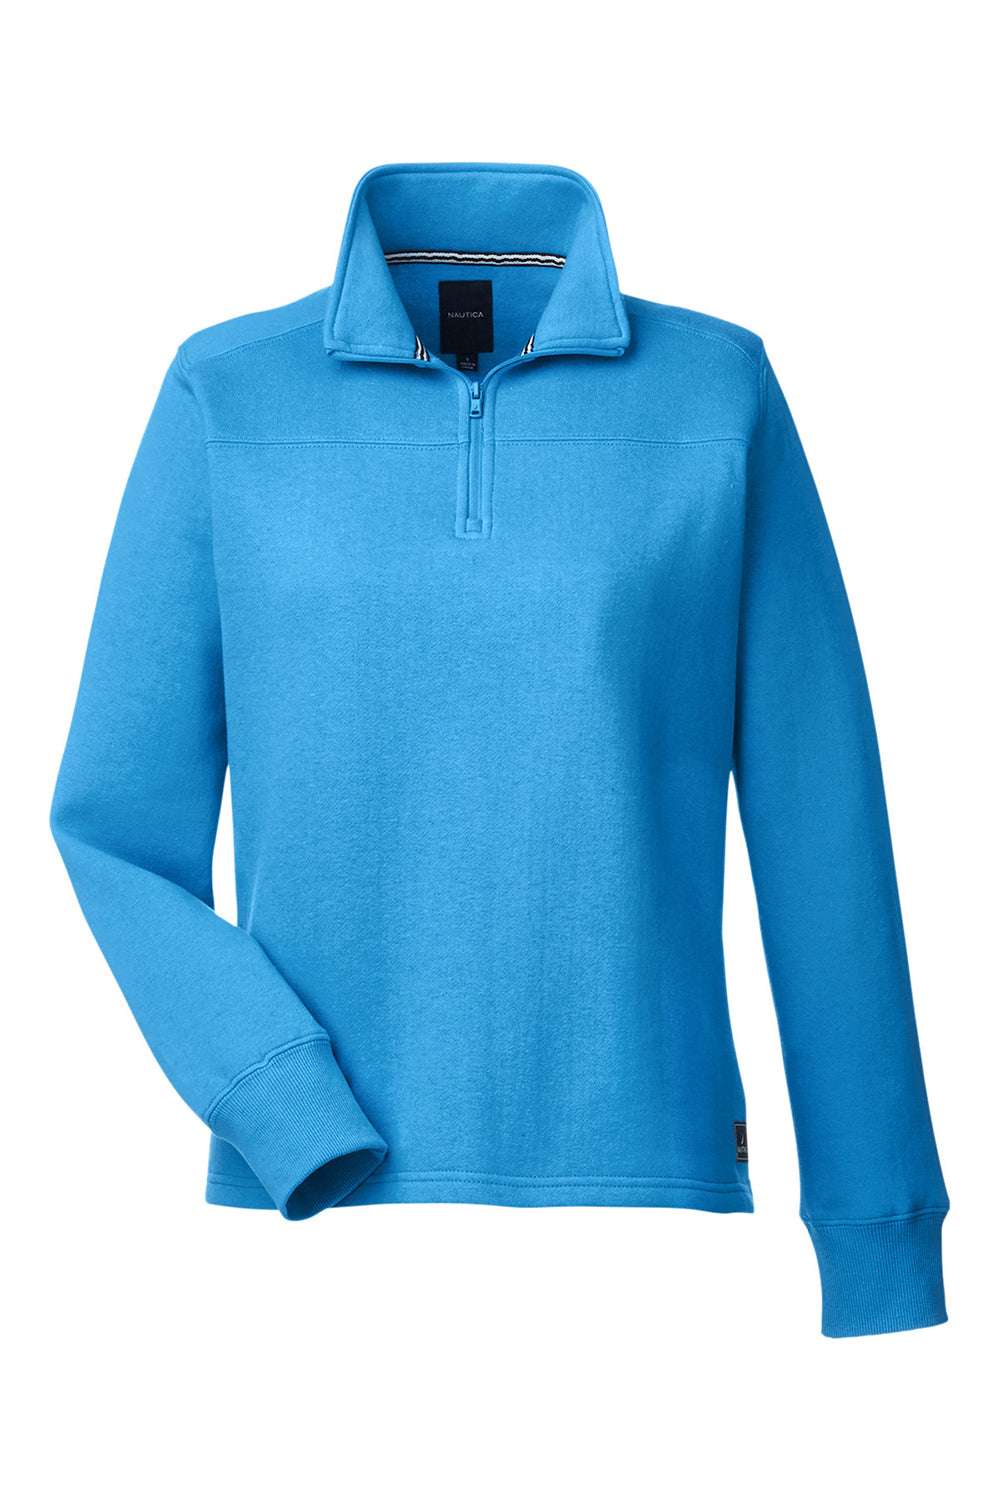 Nautica N17397 Womens Anchor Fleece 1/4 Zip Sweatshirt Azure Blue Flat Front